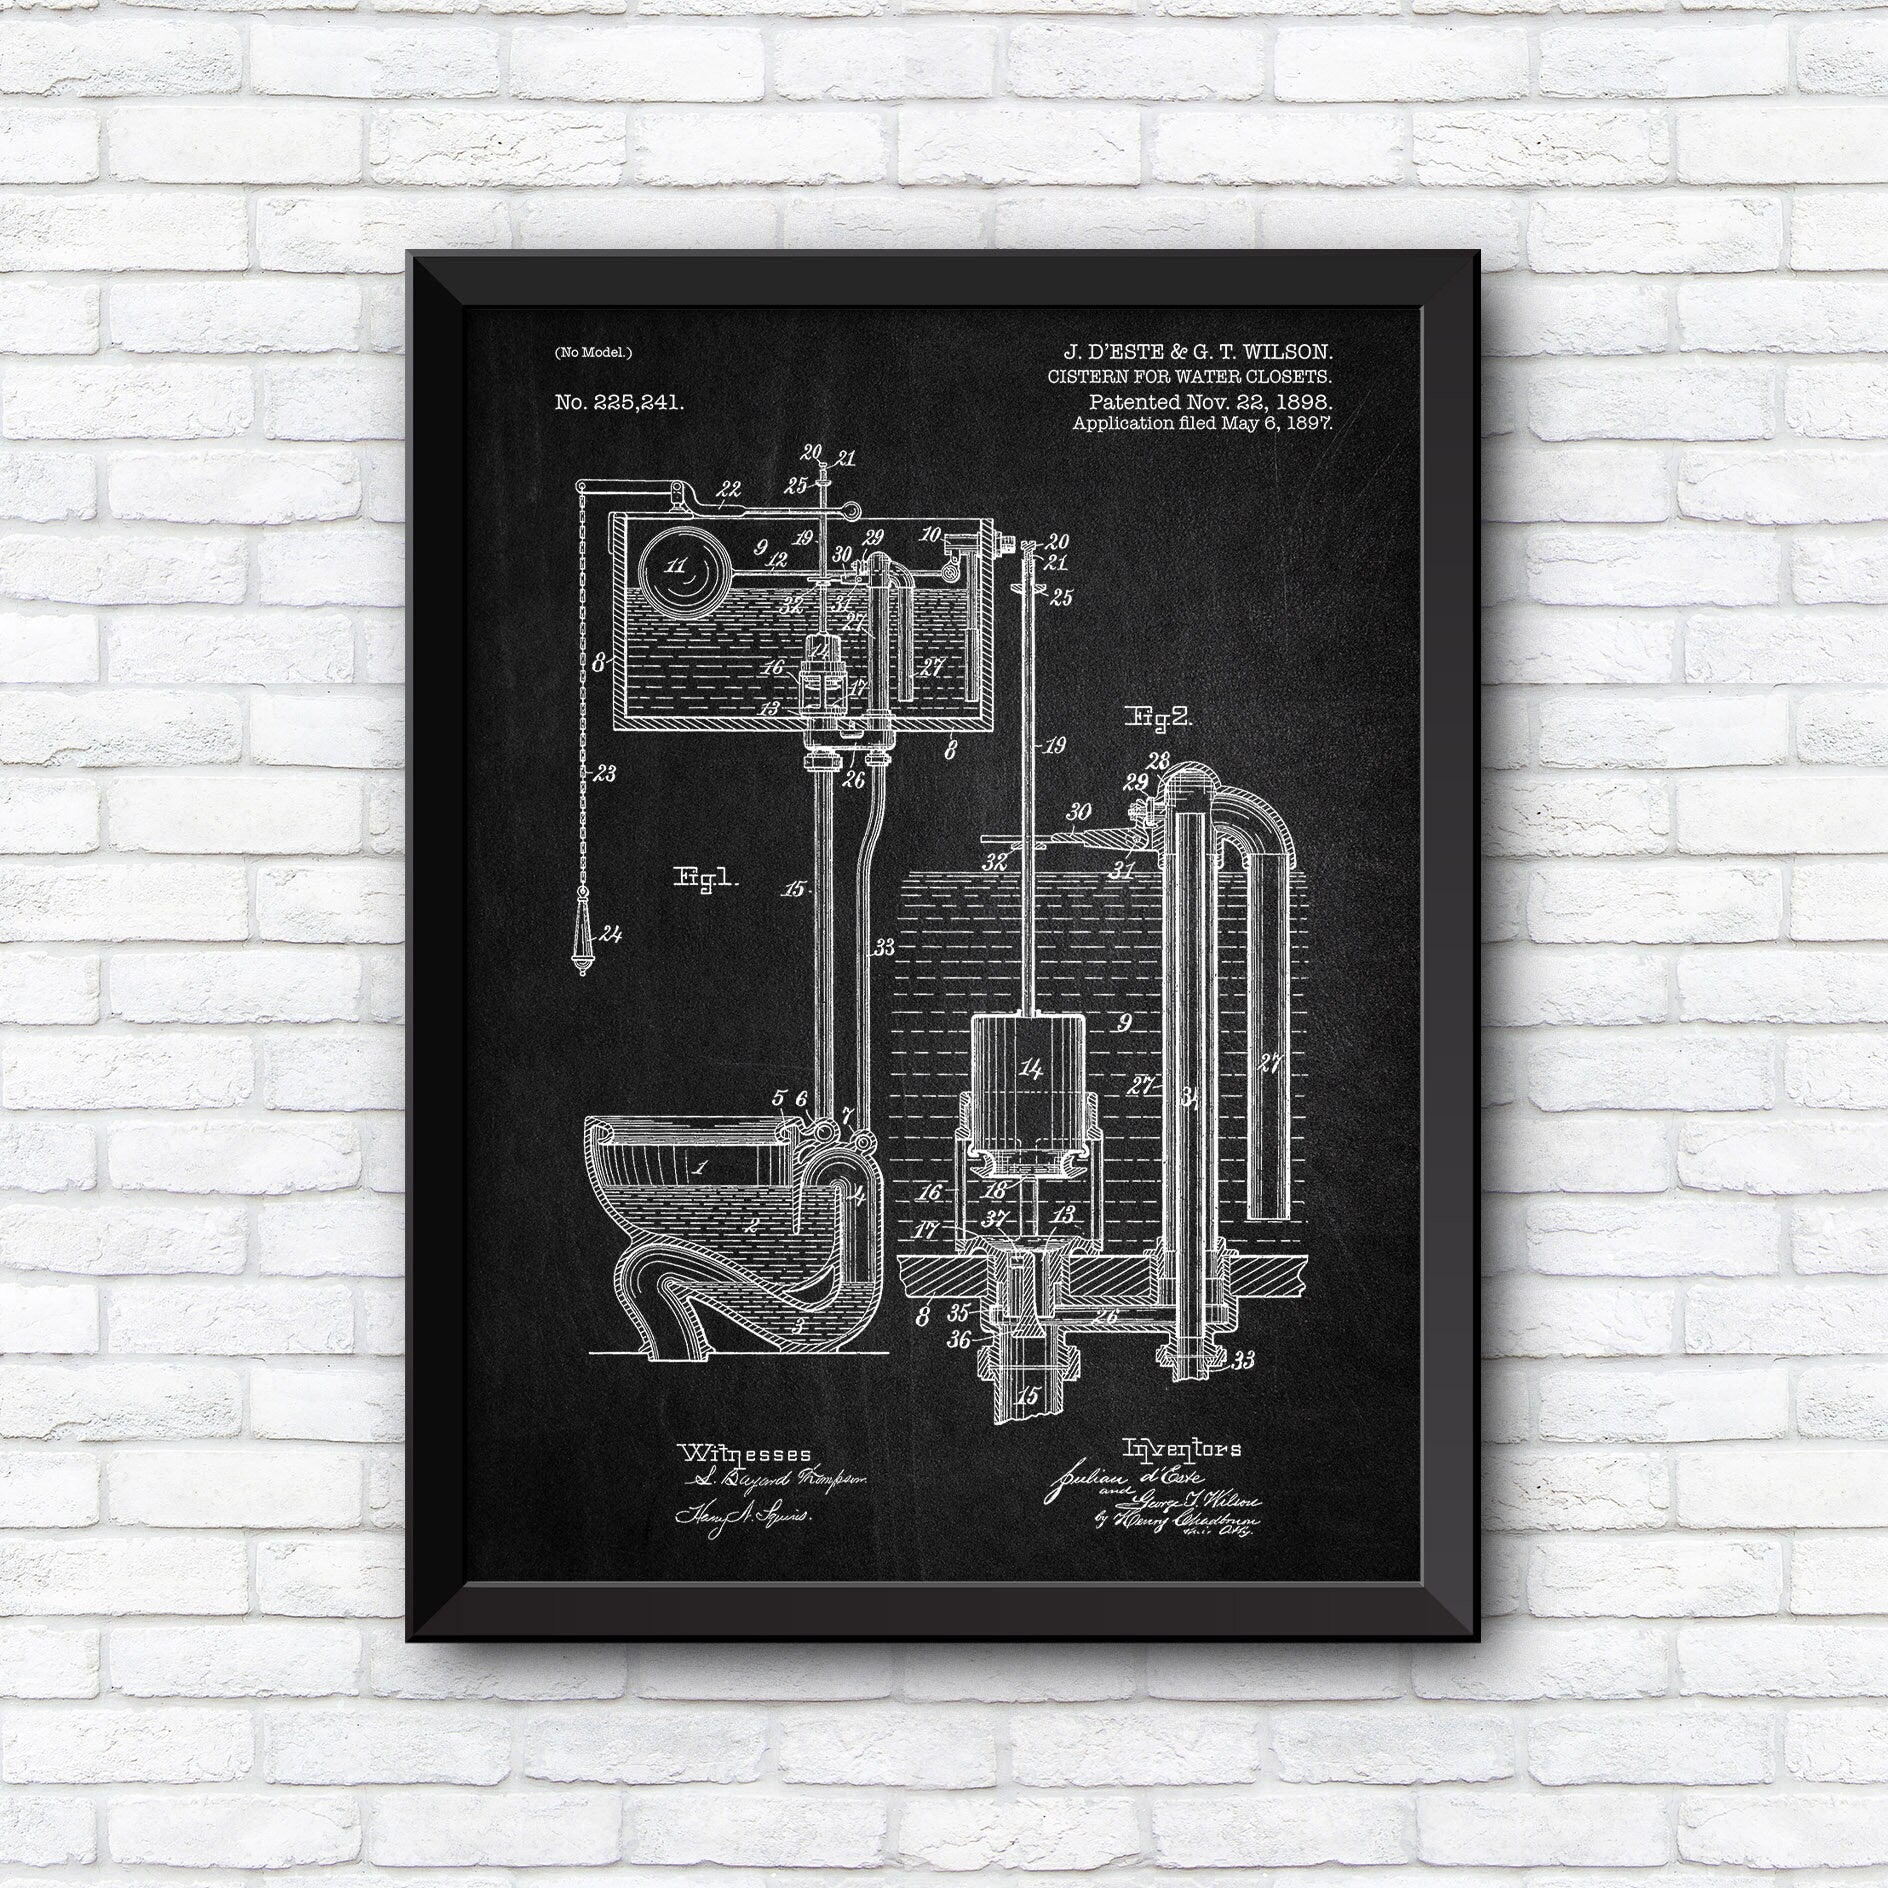 Bathroom Patent print, Cistern for Water Closets for Bathroom Patent print, Patent print, Patent print design, Vintage patent print